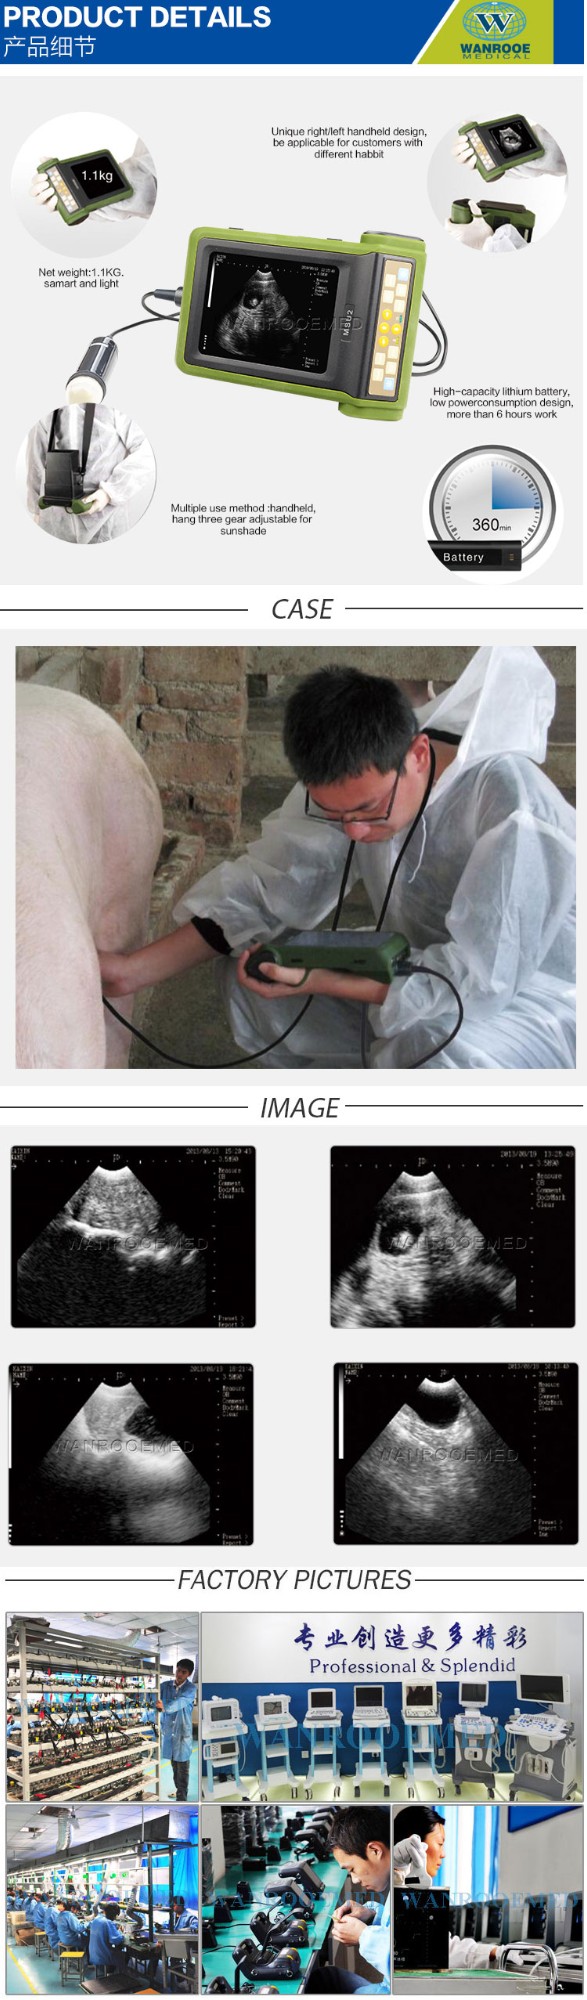 USMSU2 Digital Portable Mechanical Veterinary Ultrasound Scanner.jpg